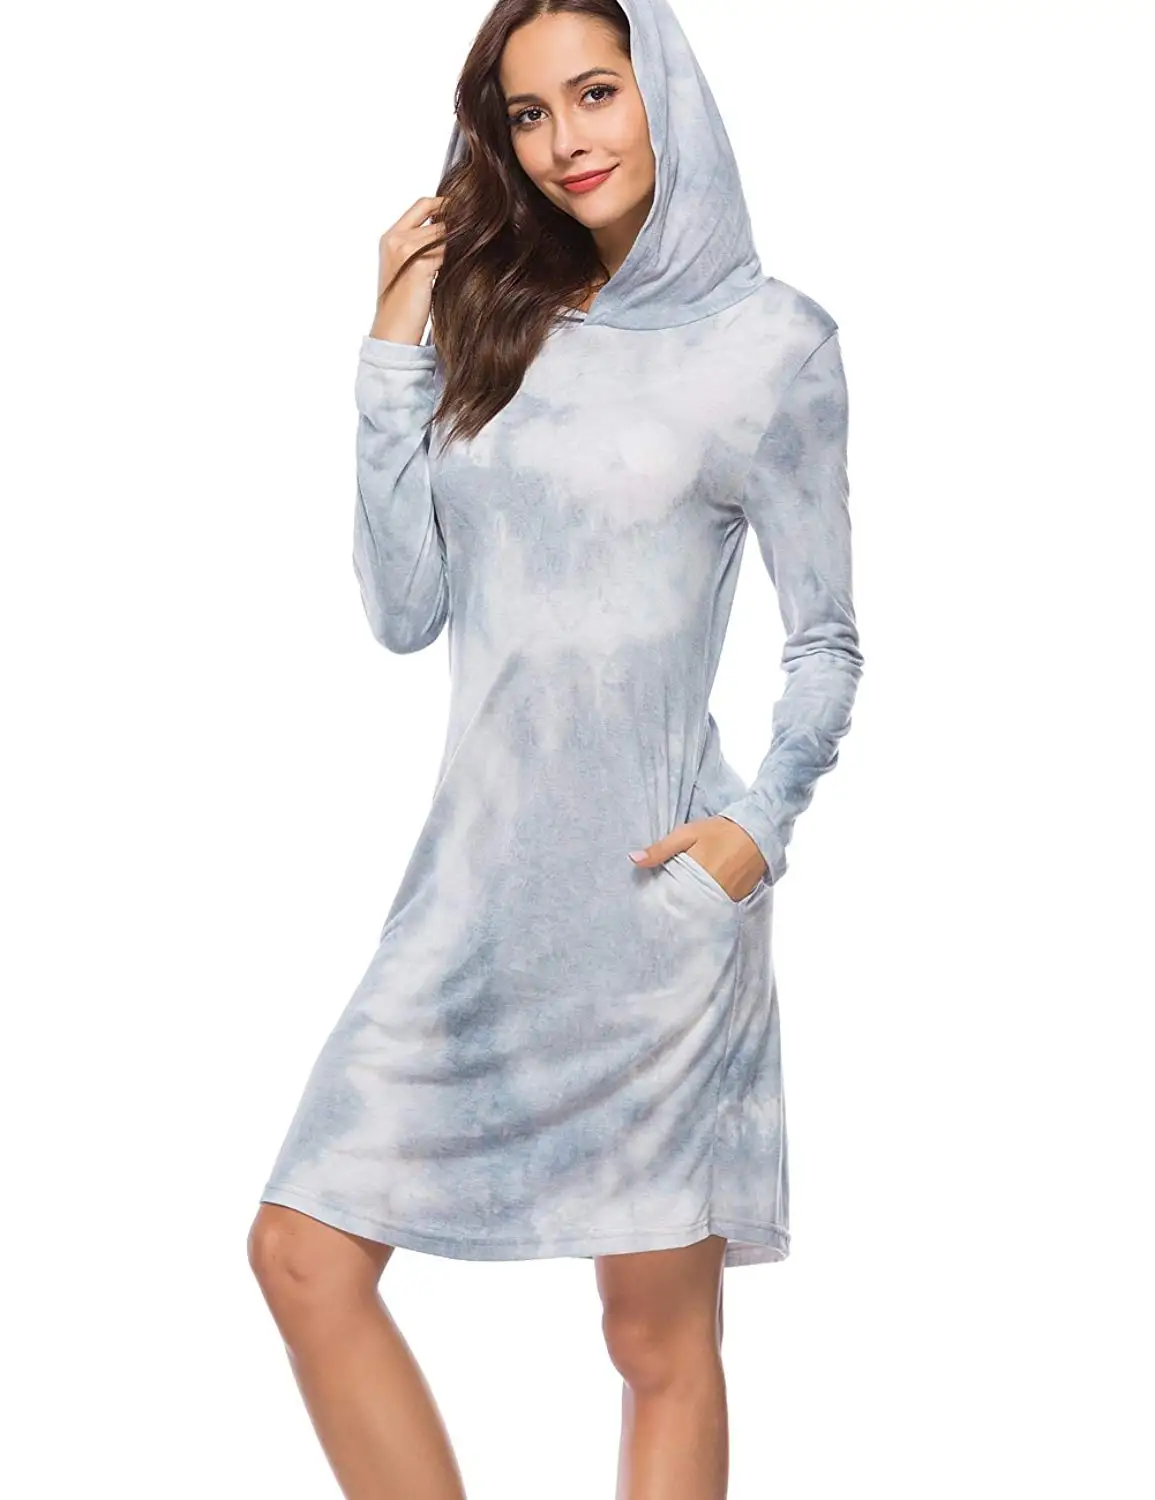 Cheap Sweatshirt Dress, find Sweatshirt Dress deals on line at Alibaba.com